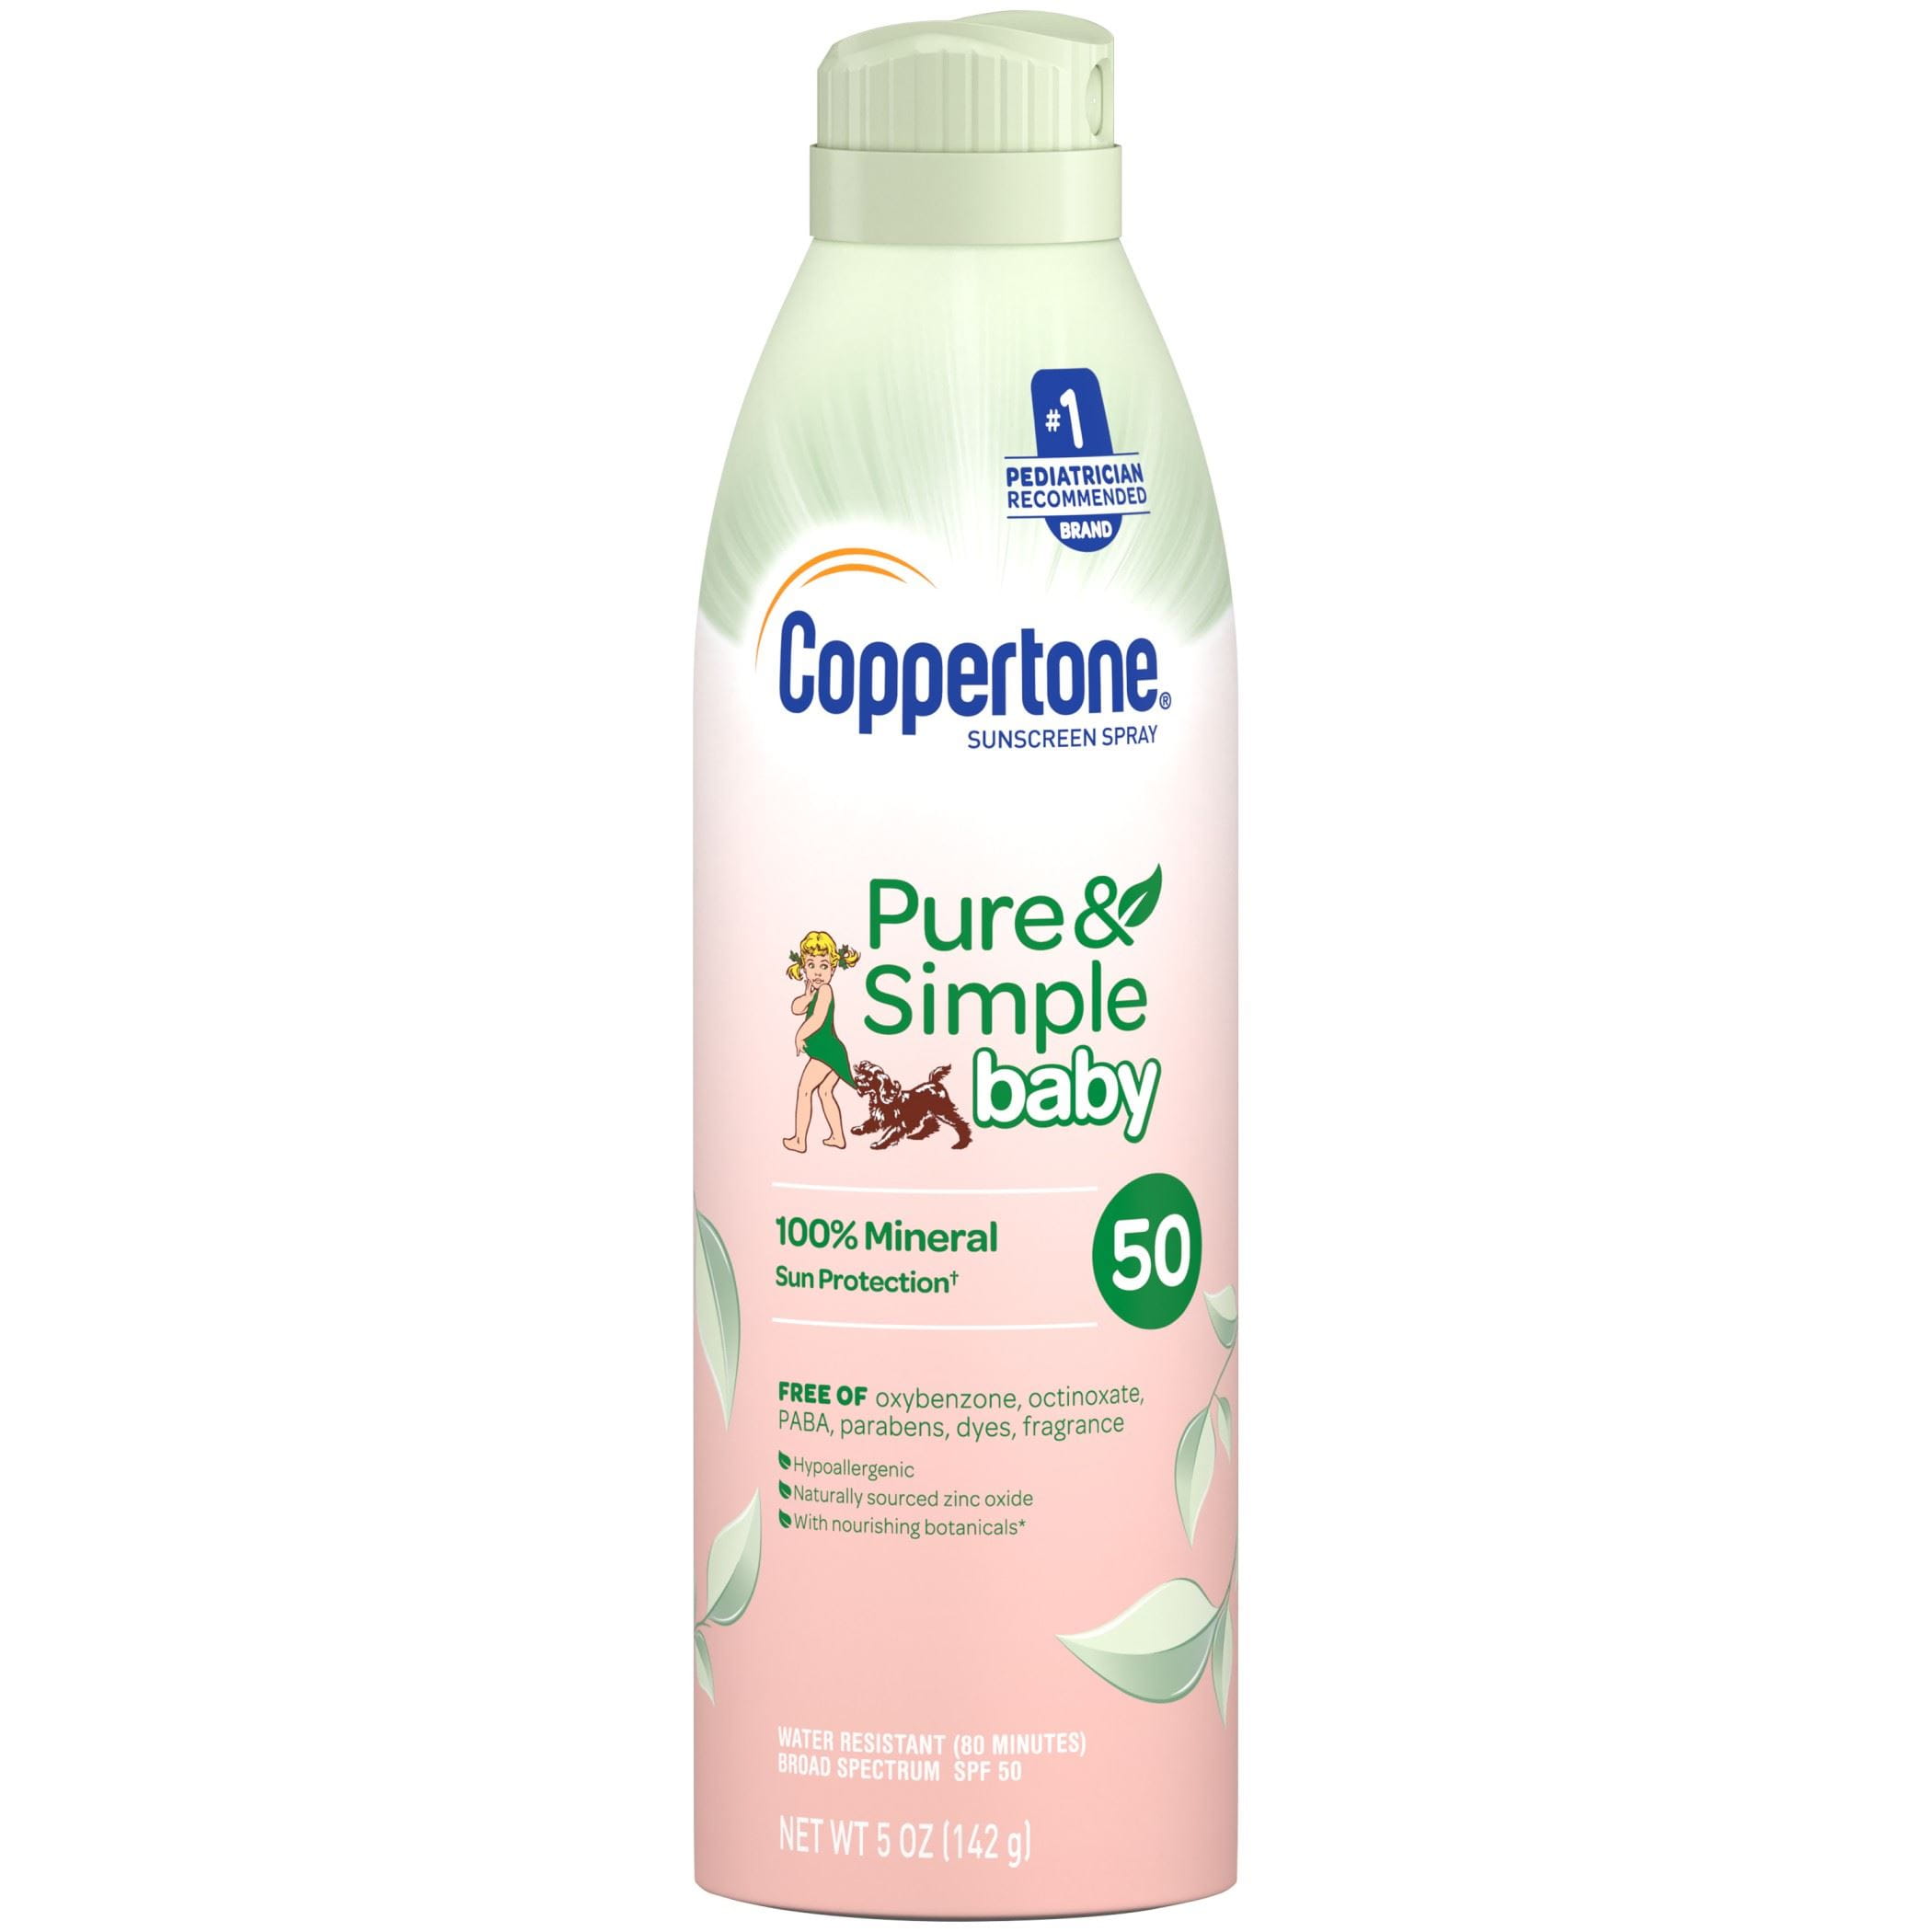 Coppertone Pure & Simple Baby SPF 50